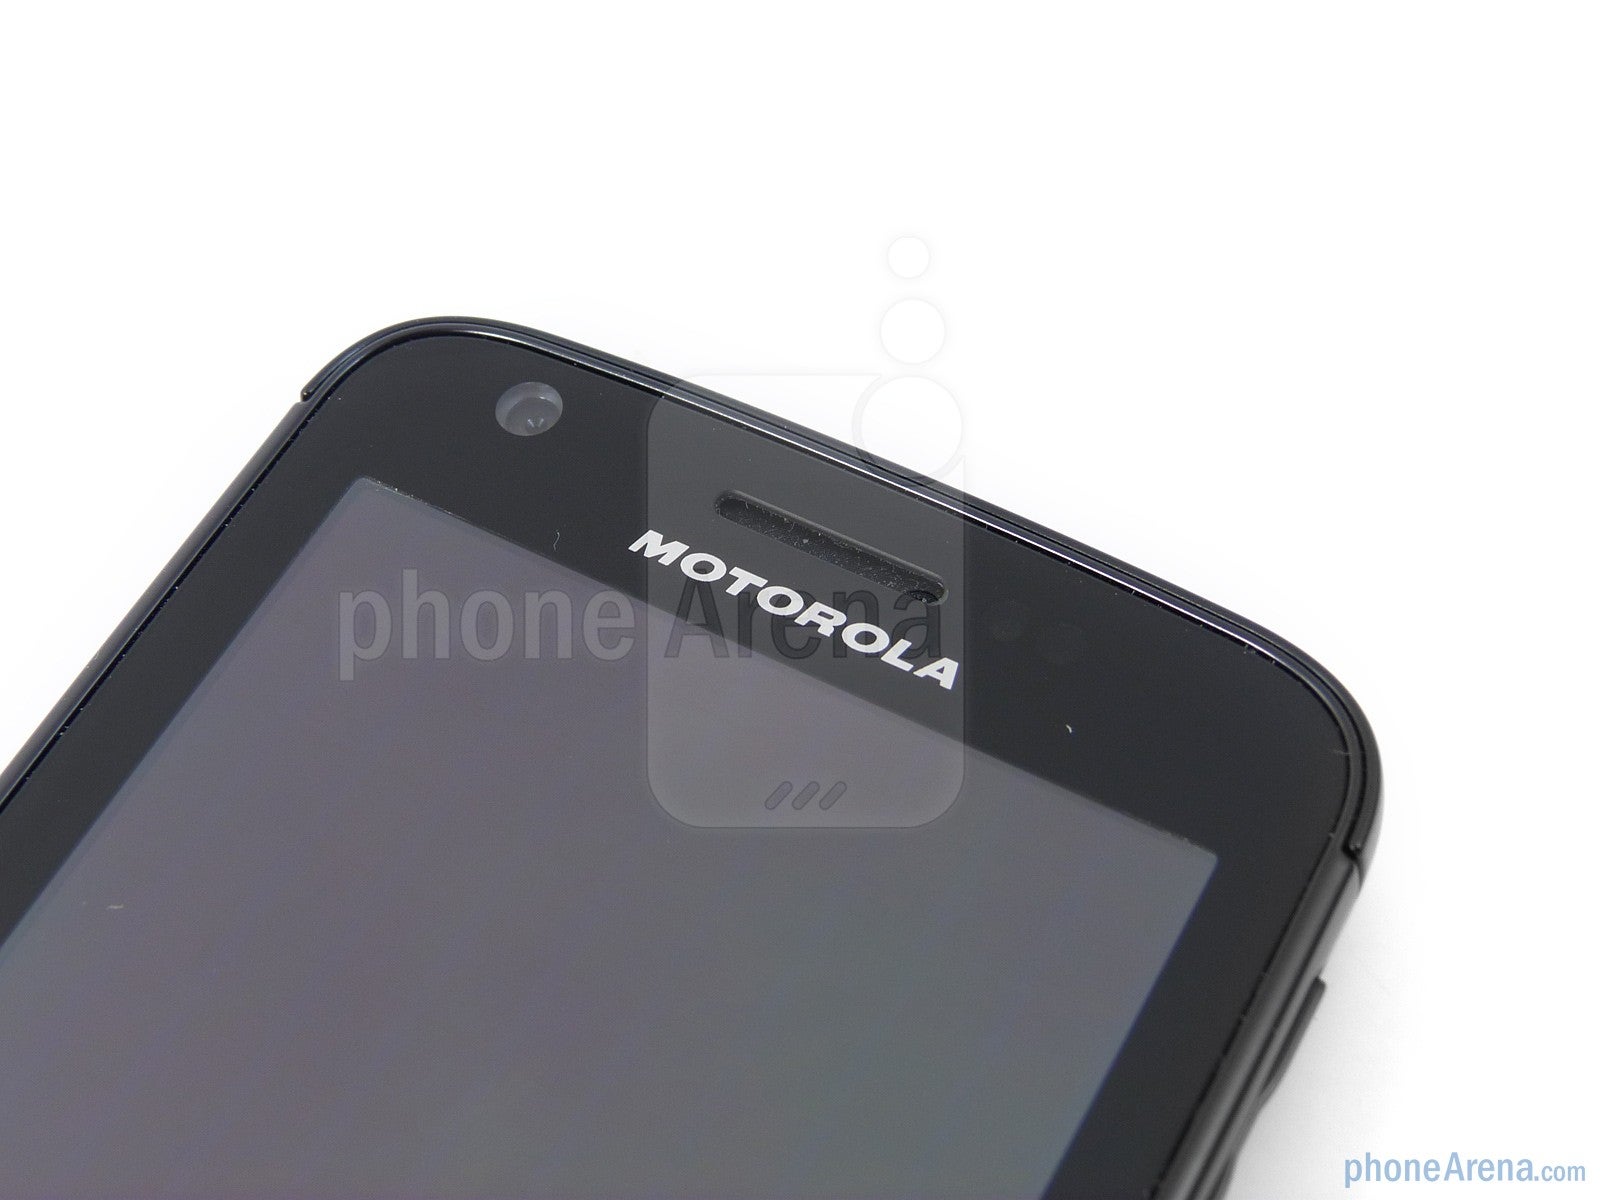 Front facing camera - Motorola ATRIX 4G Review